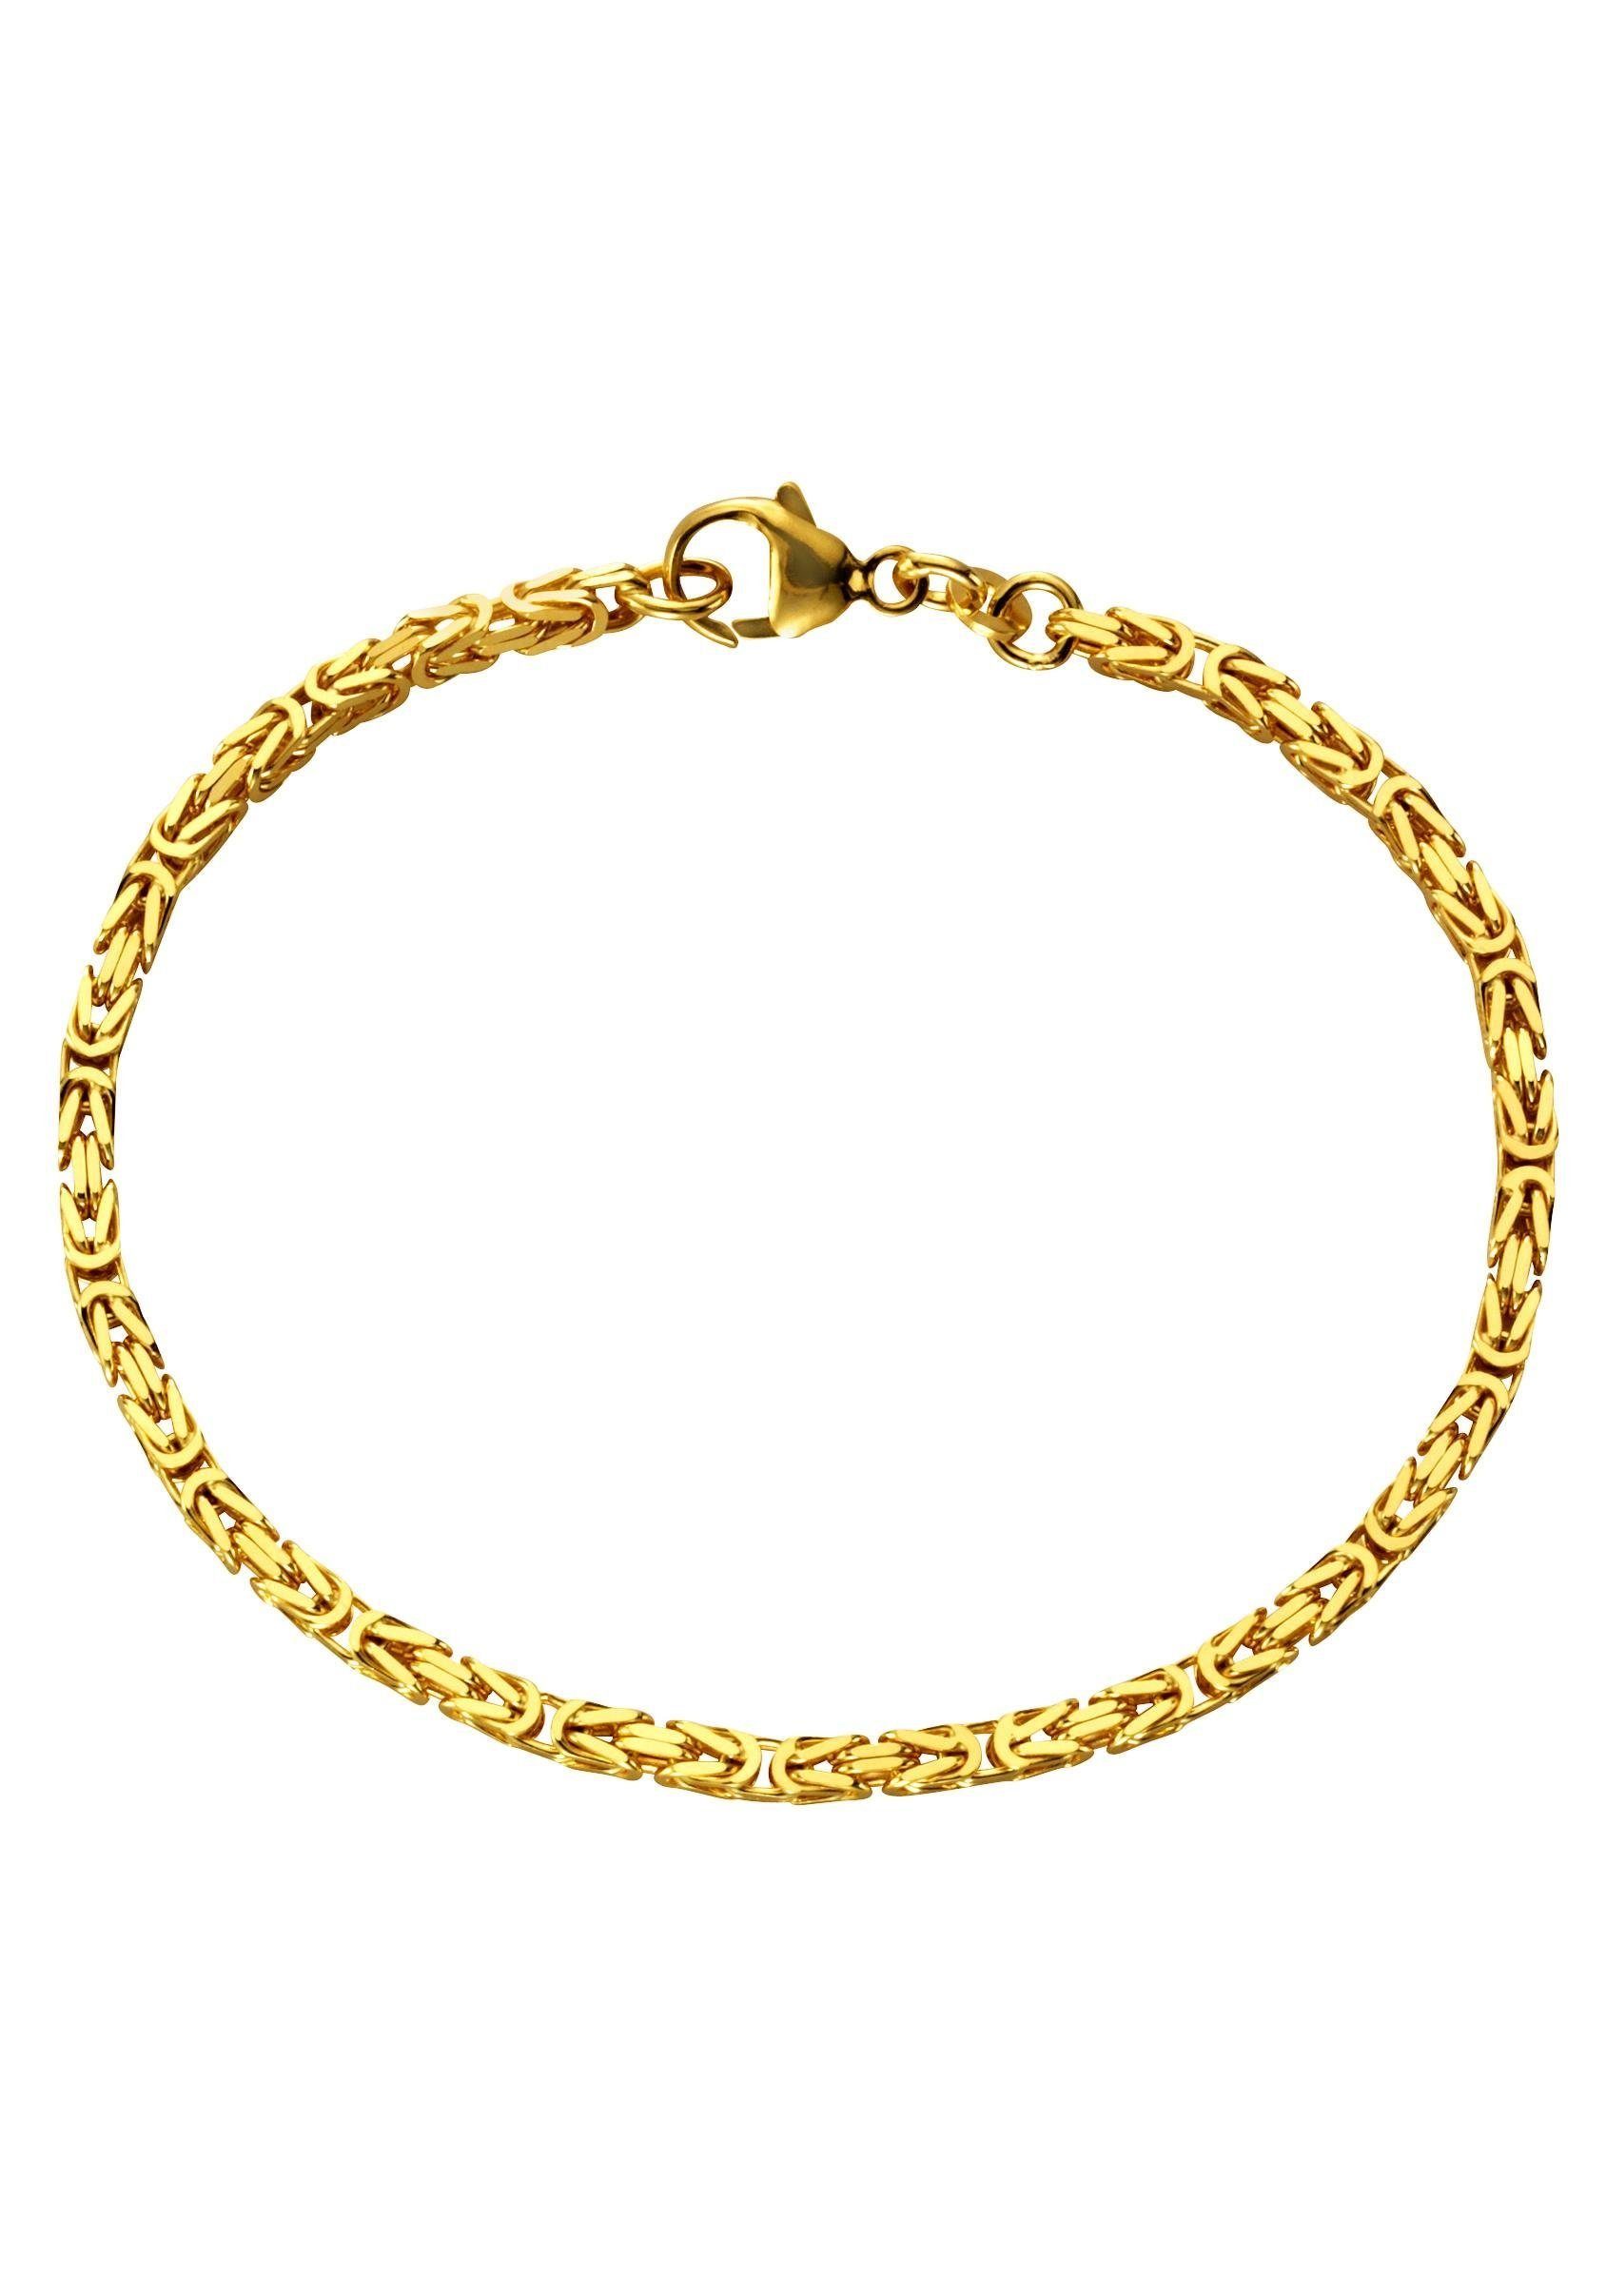 Firetti Goldarmband Schmuck Geschenk Gold 333 in Königskettengliederung, 2,8 mm, zu Kleid, Shirt, Jeans, Sneaker! Anlass Geburtstag Weihnachten